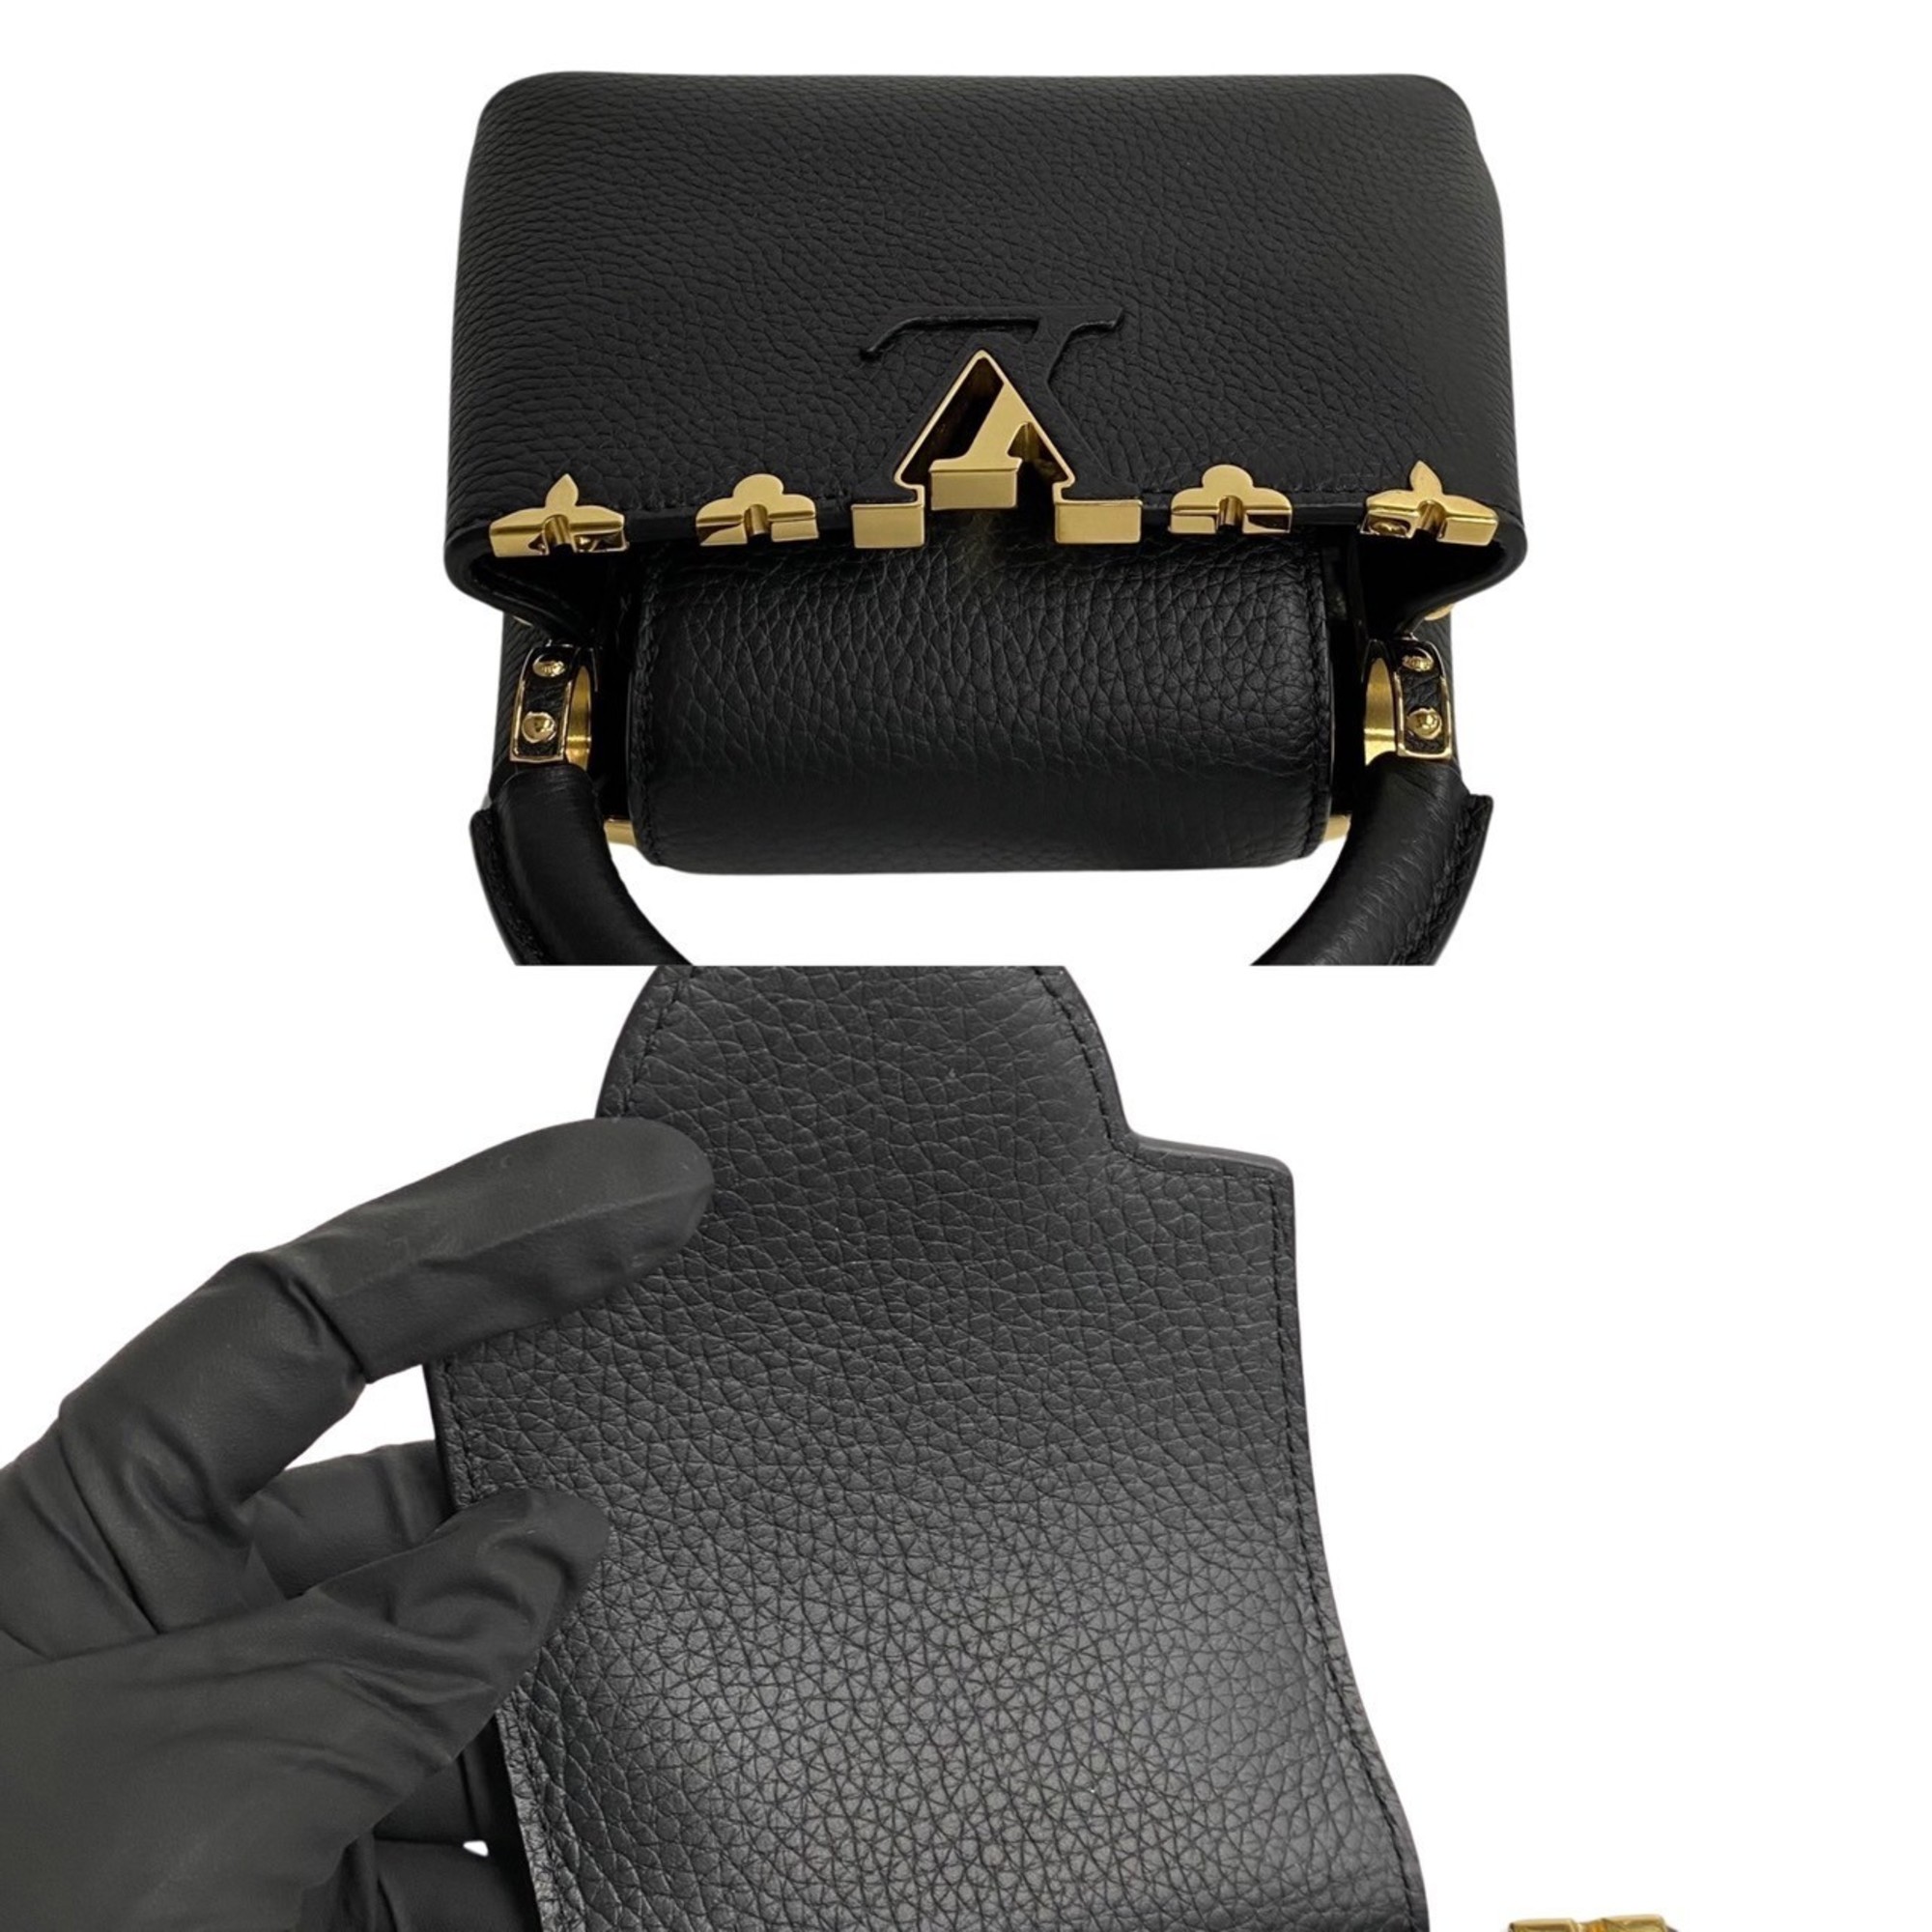 LOUIS VUITTON Capucines MINI flower metal fittings leather 2way handbag shoulder bag black 18716